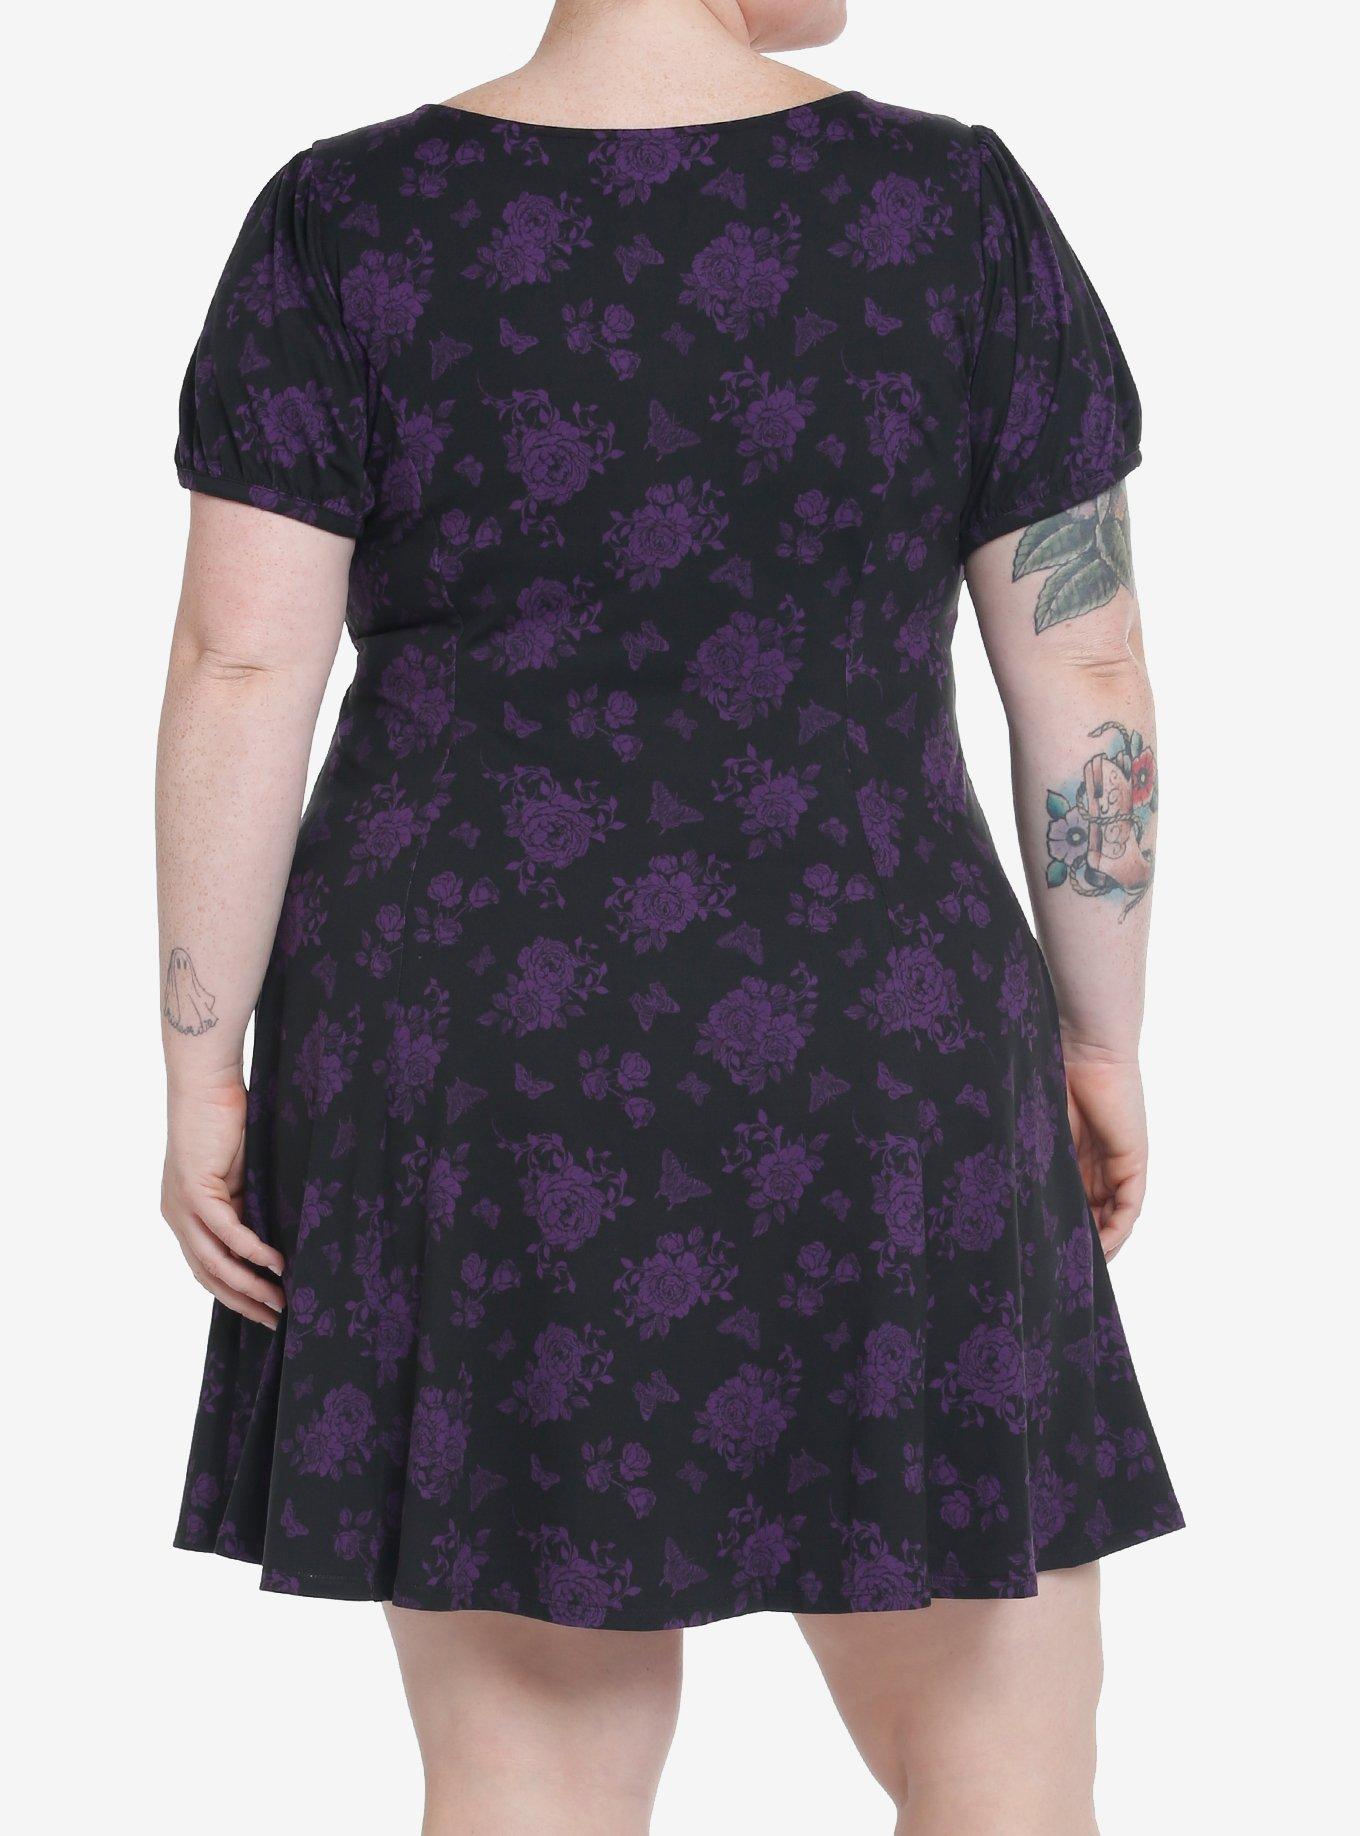 Cosmic Aura Black & Purple Rose Lace-Up Babydoll Dress Plus Size, BLACK, alternate